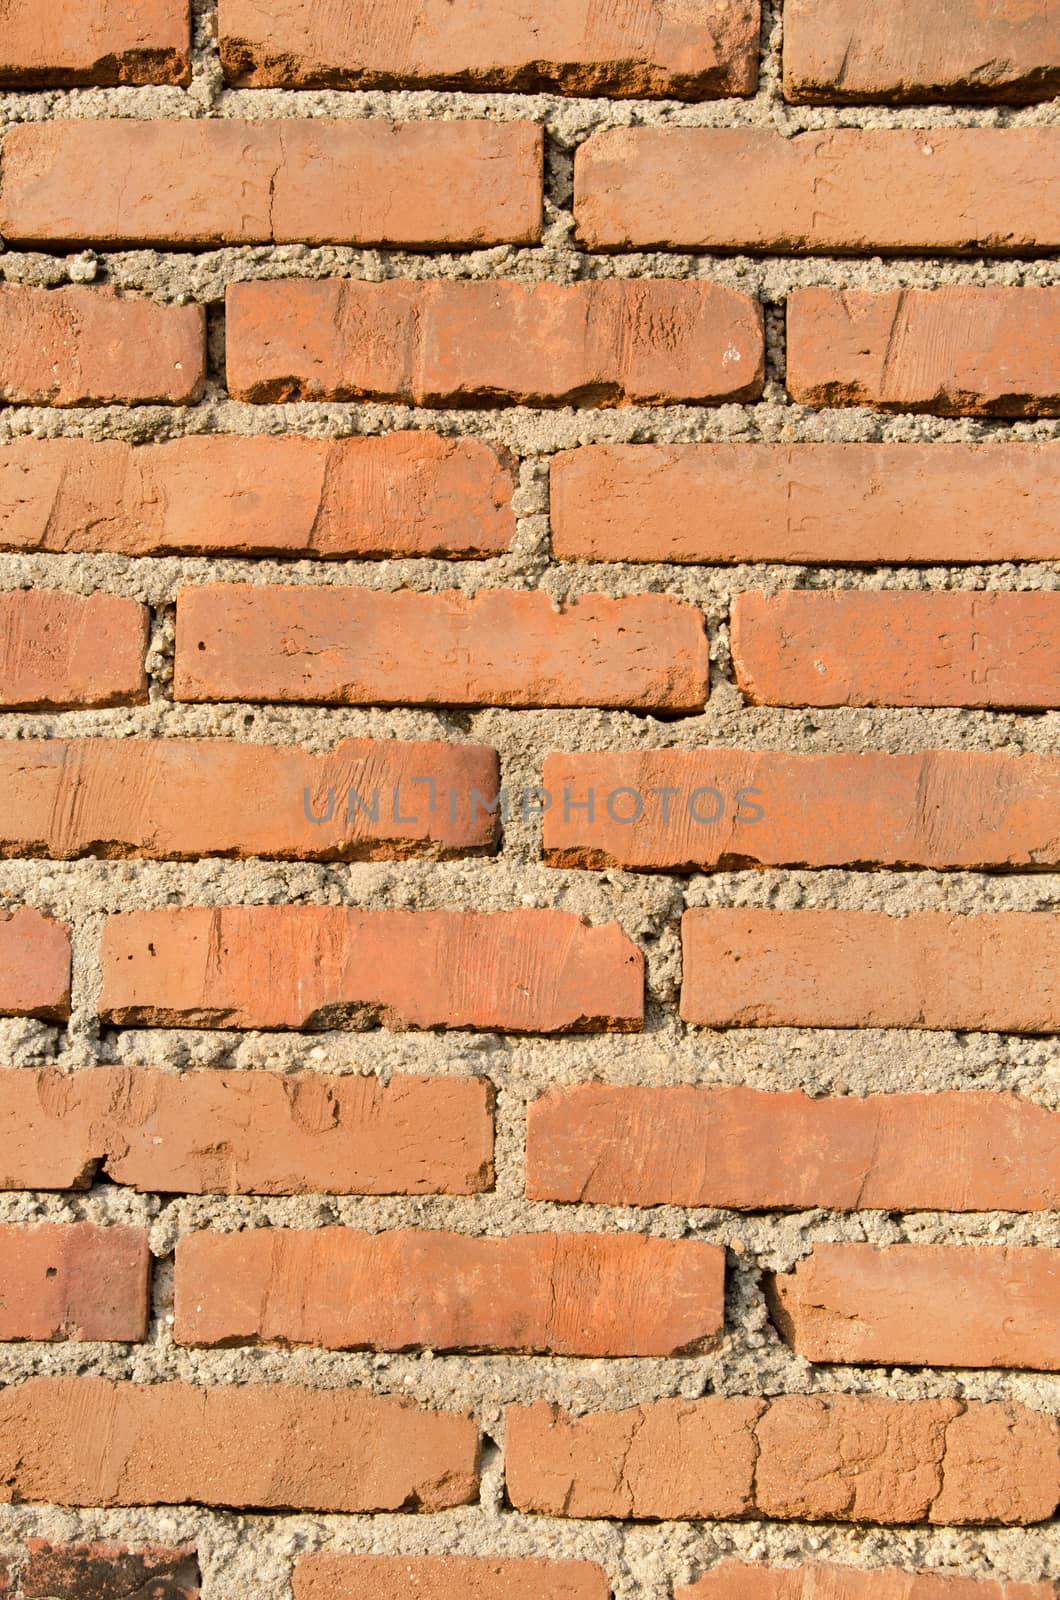 Brick wall by richpav